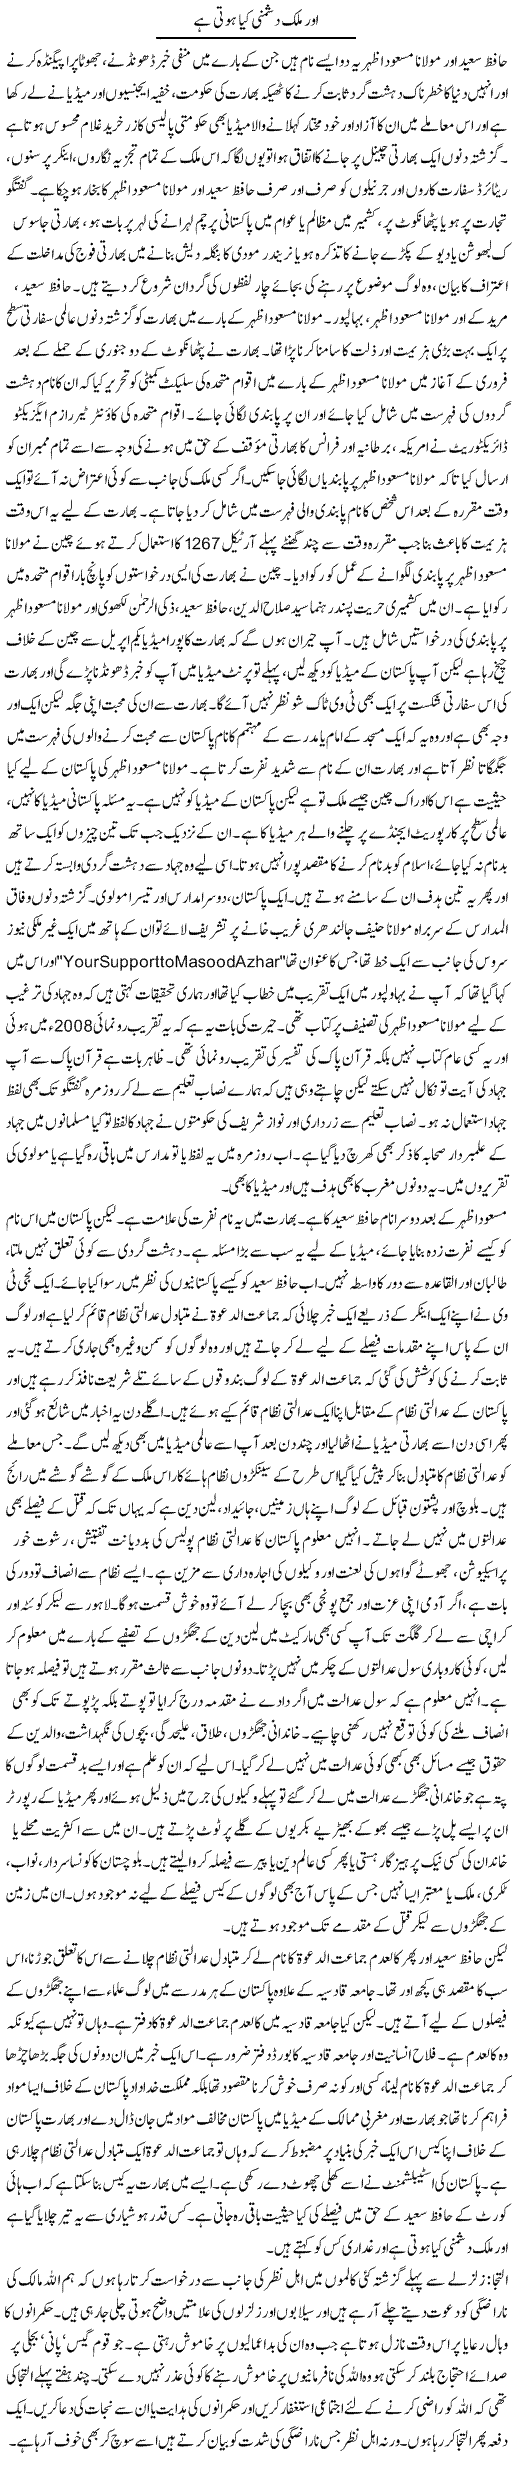 Aor Mulk Dushmani Kia Hoti Hai | Orya Maqbool Jan | Daily Urdu Columns